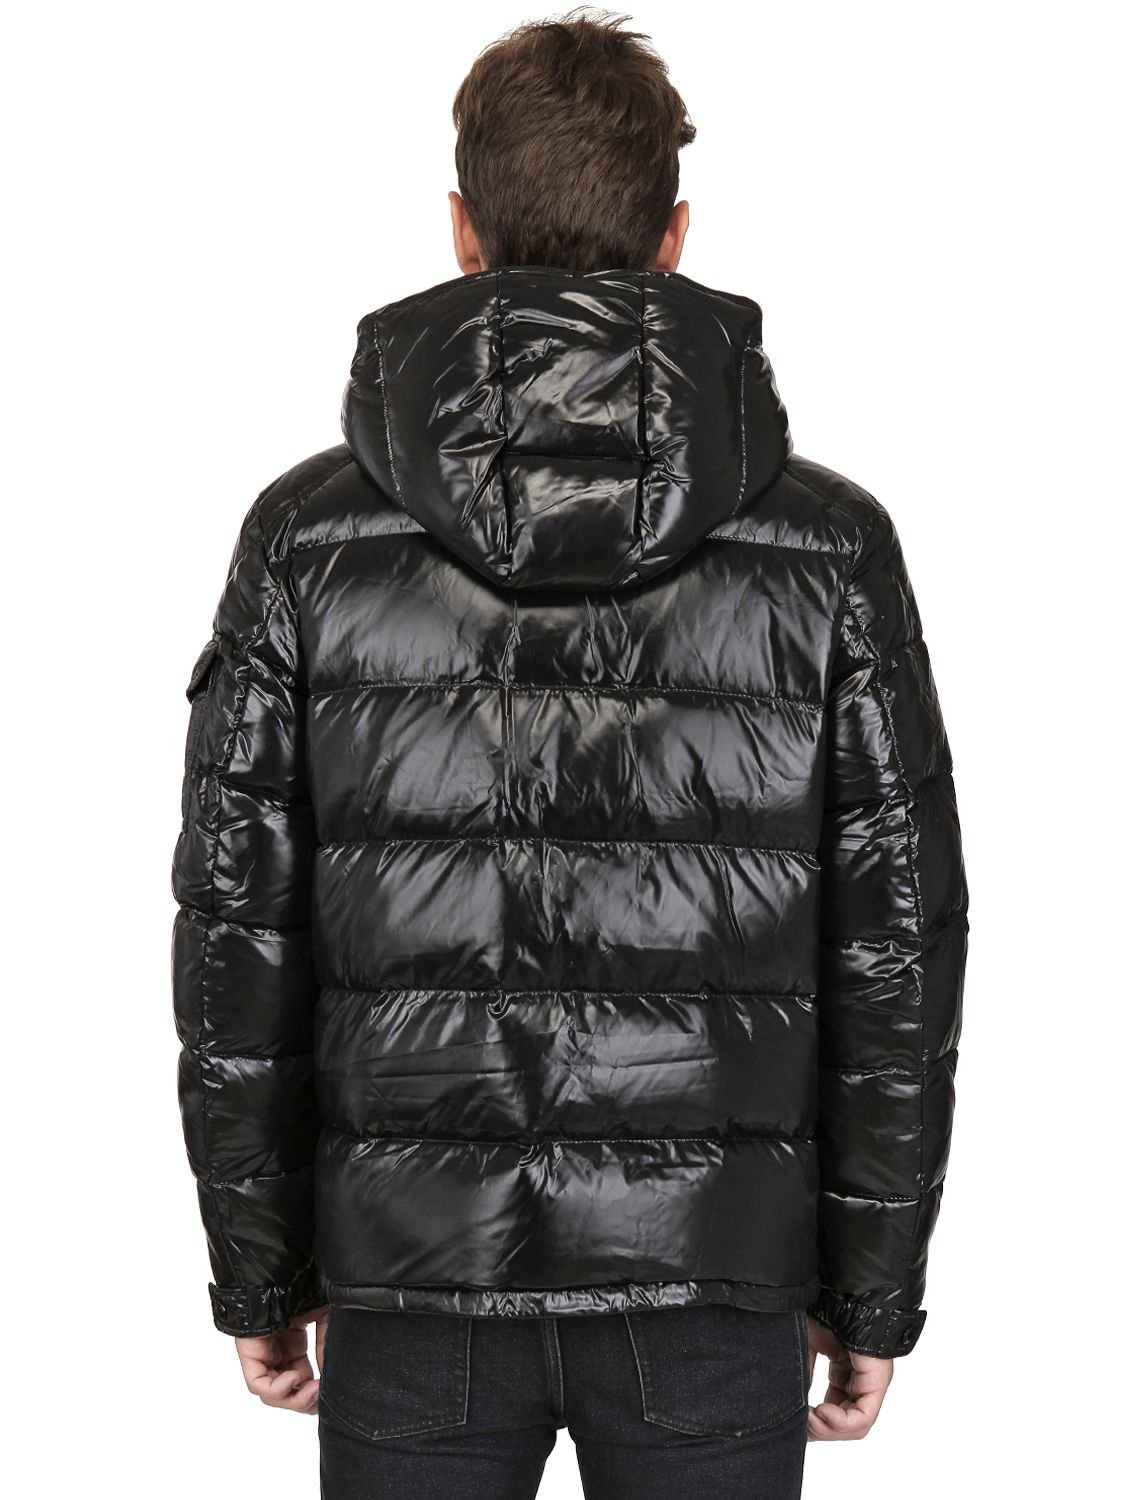 Moncler Maya Shiny Nylon Down Jacket in Black for Men - Lyst